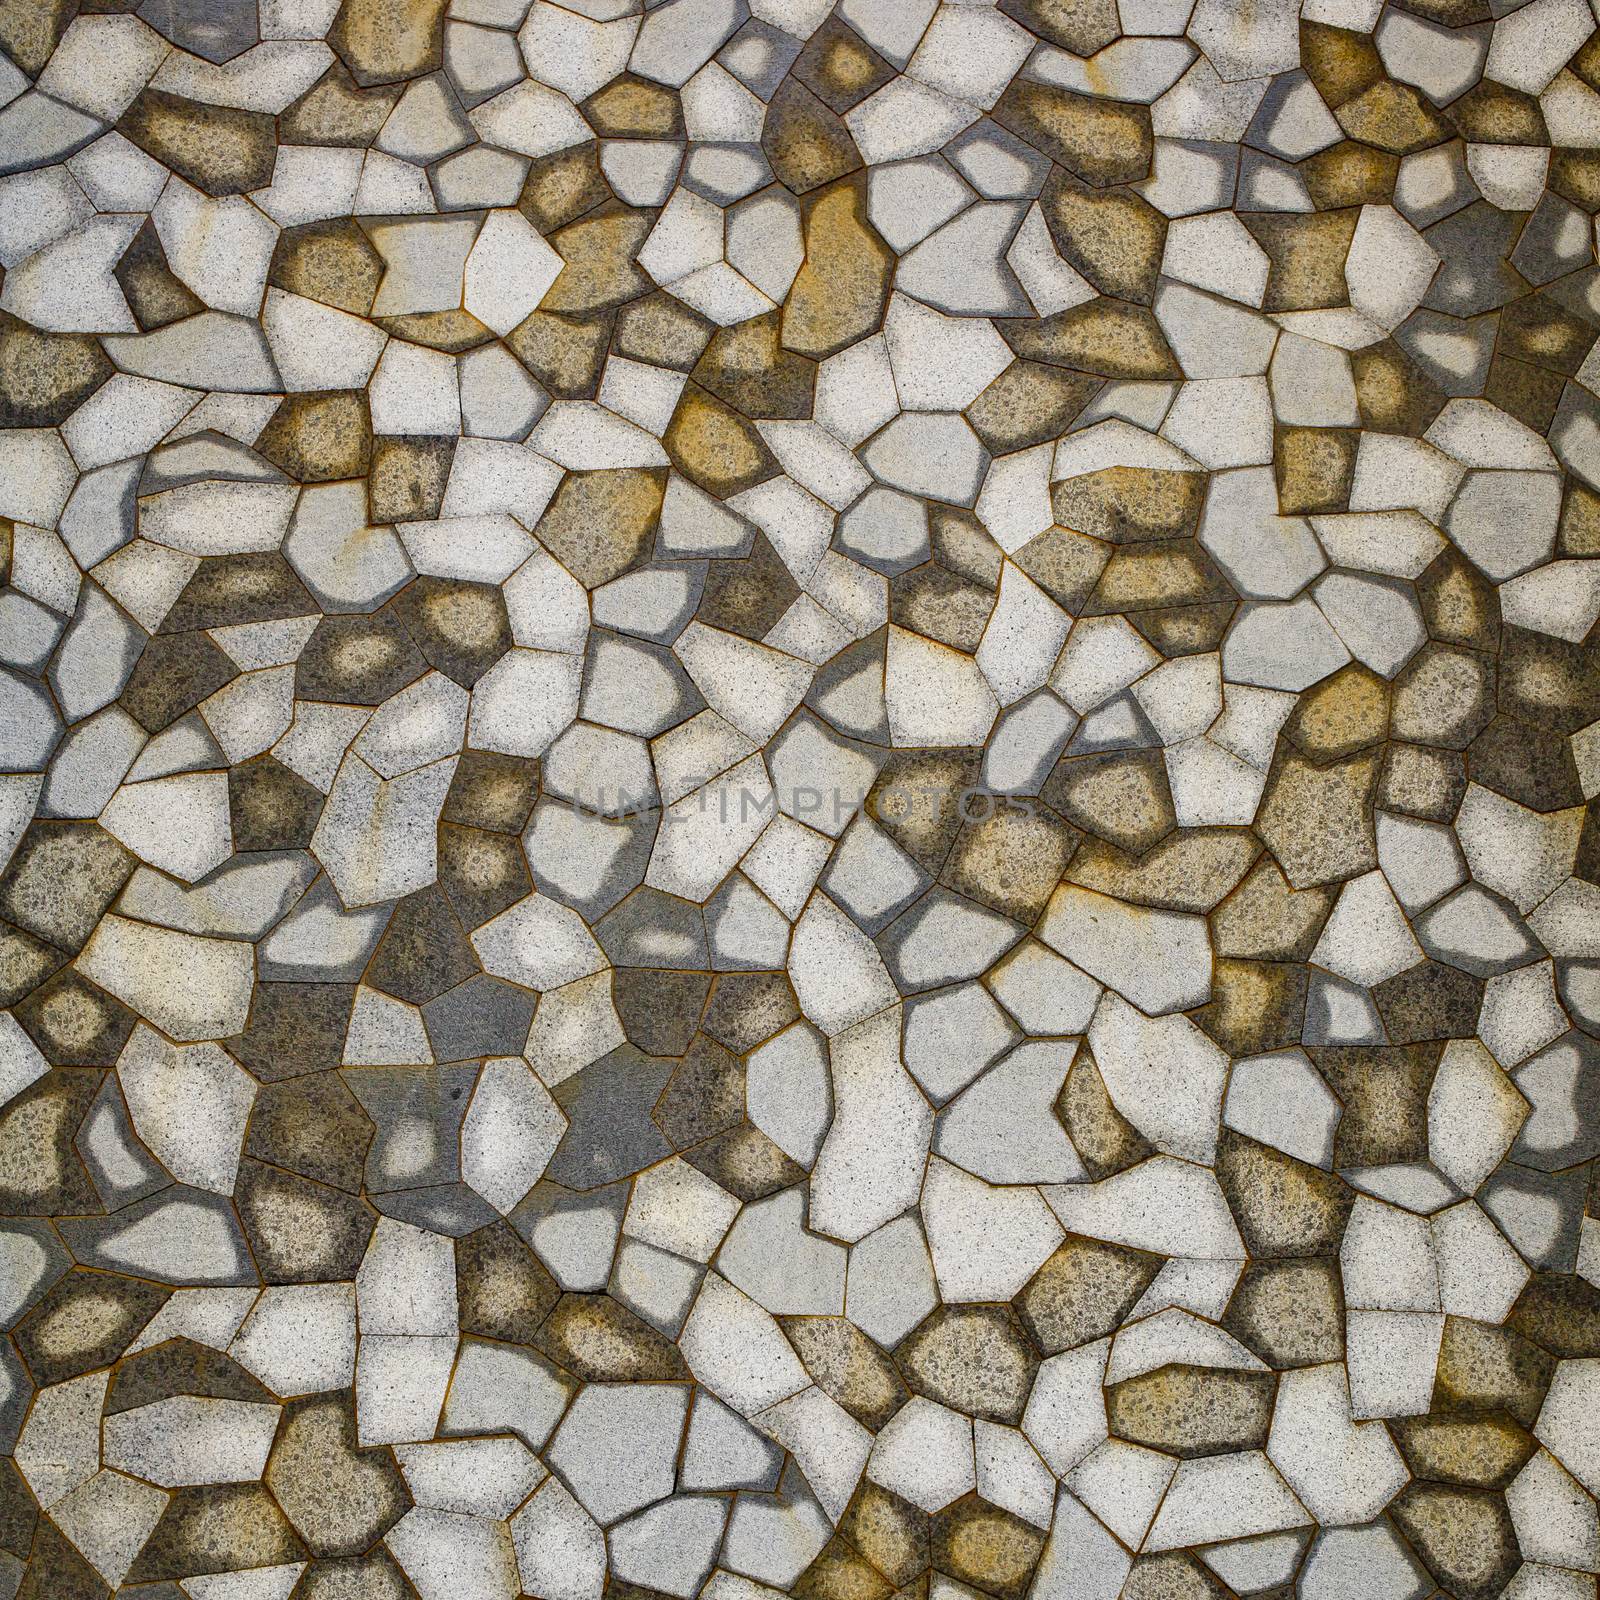 brown, white, gray tiles mosaic background.